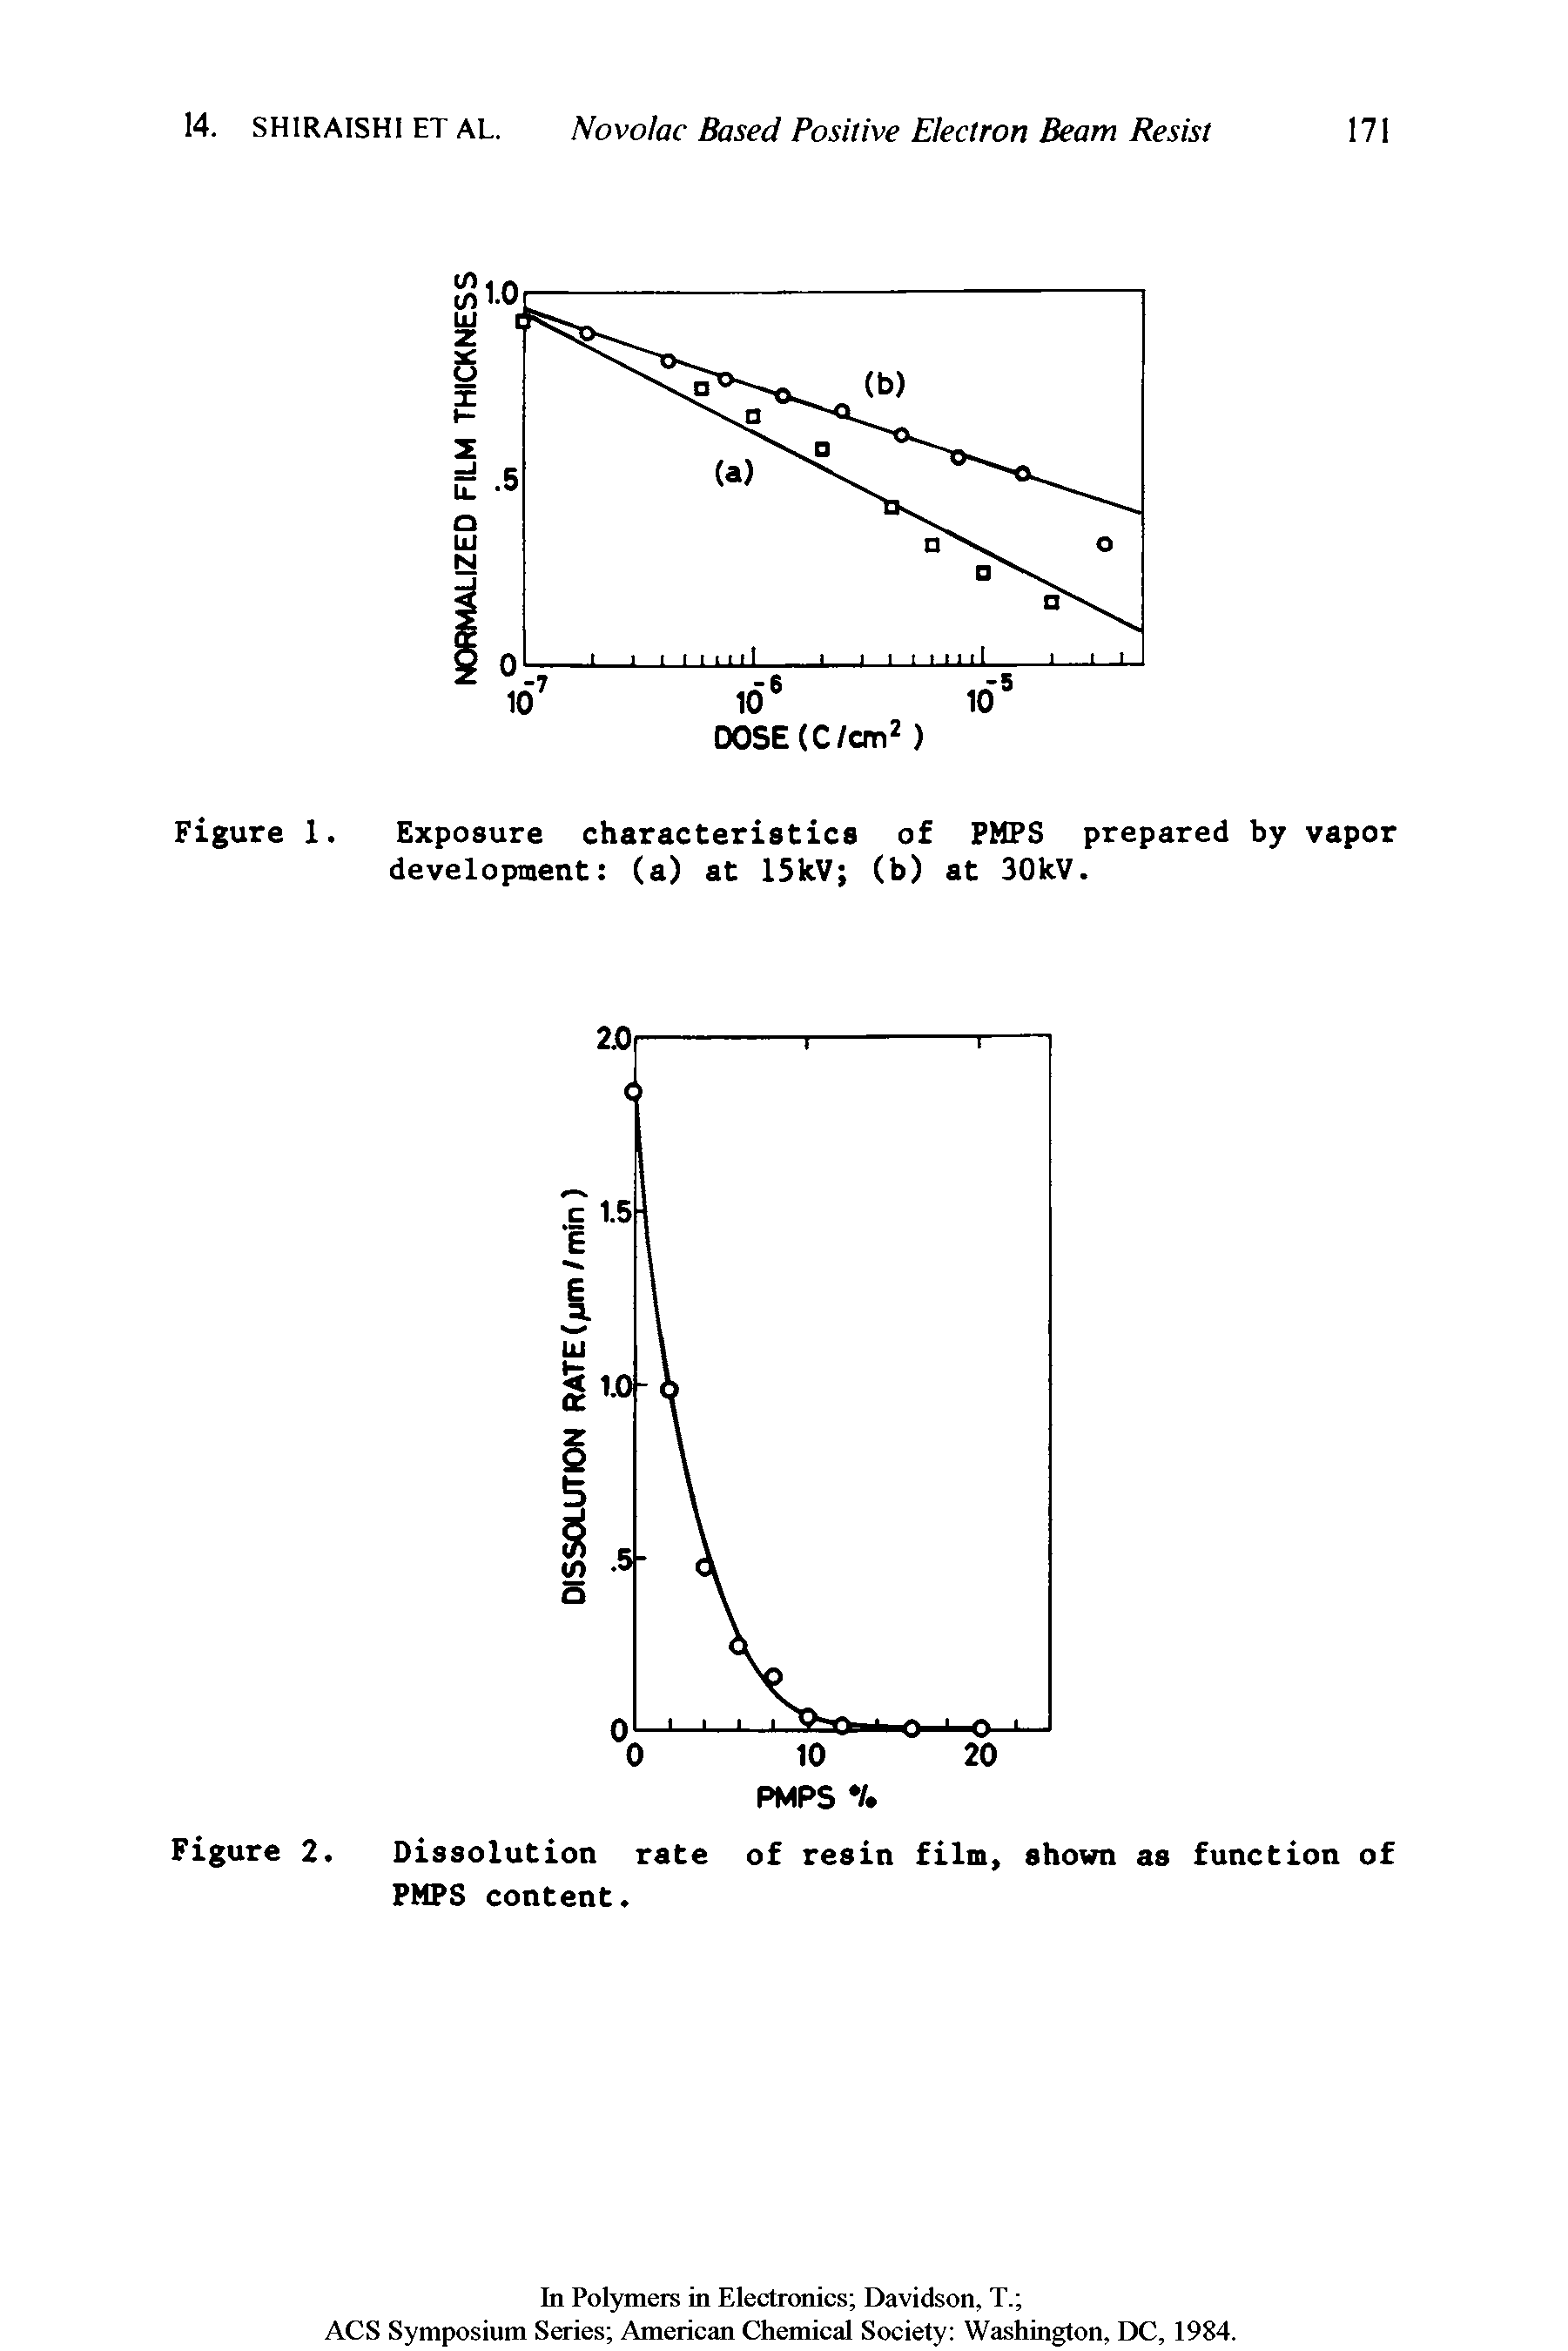 Figure 1. Exposure characteristics of PMPS prepared by vapor development (a) at 15kV (b) at 30kV.